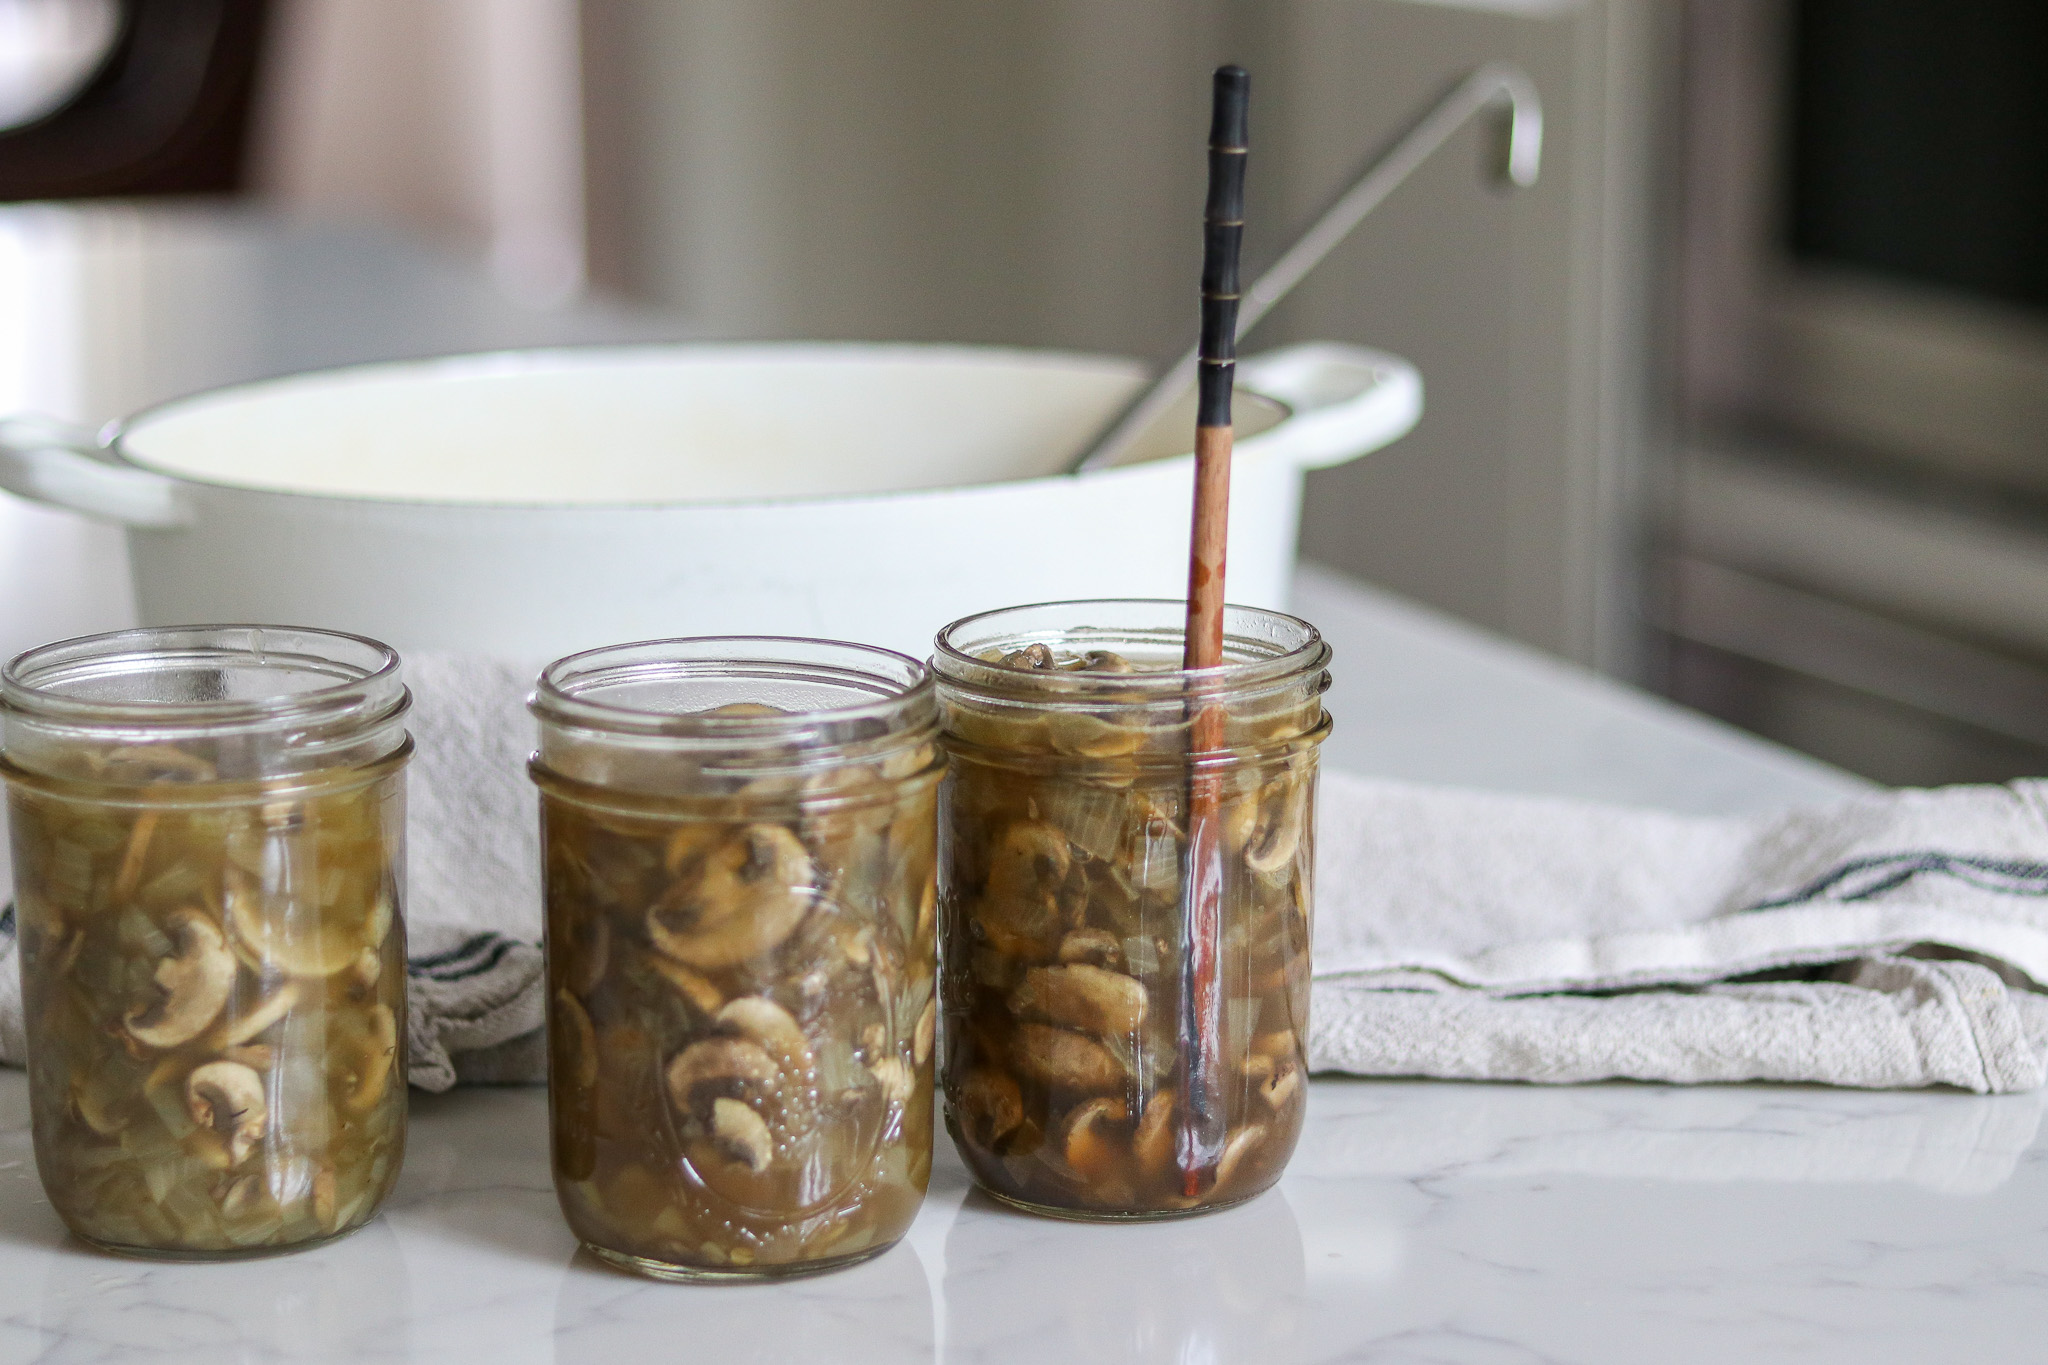 De-bubbling Mushroom Soup Jars for canning